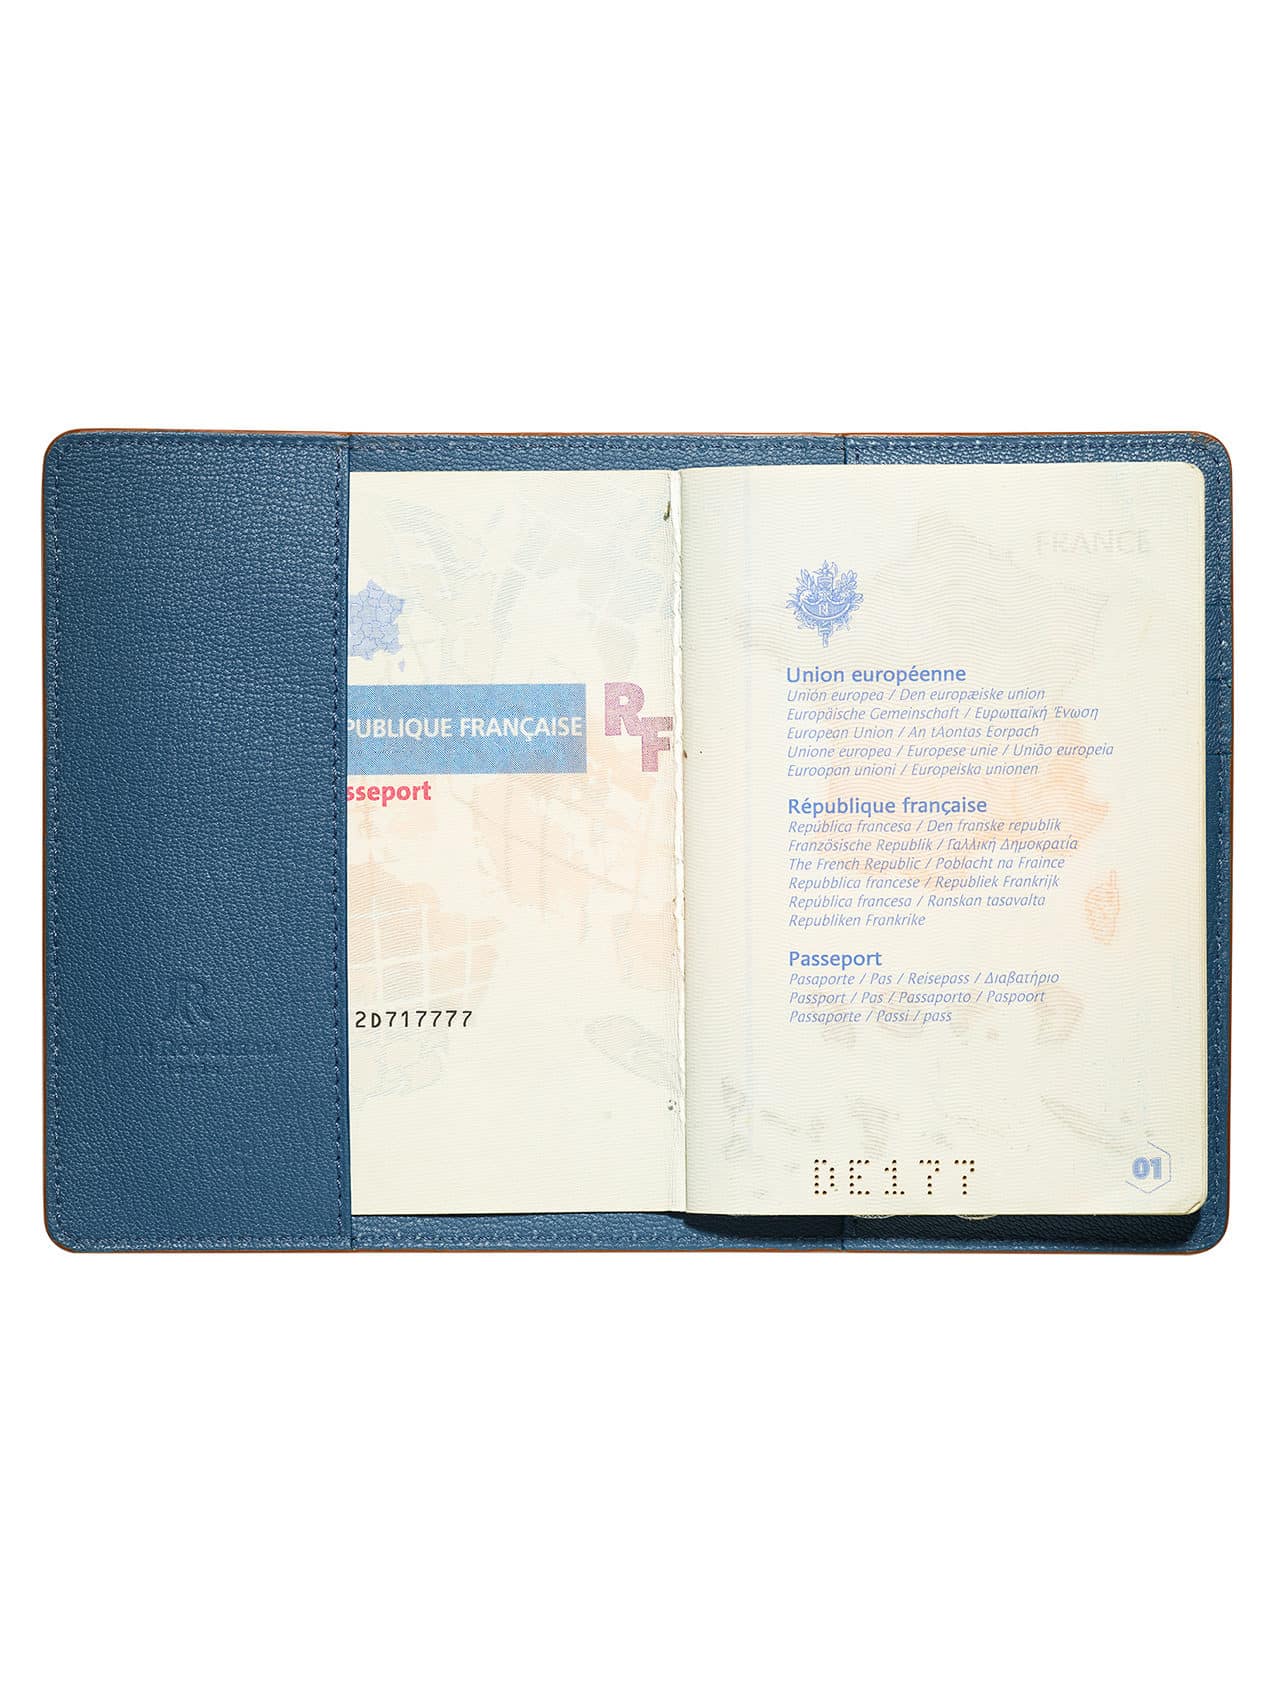 jean rousseau watch strap blue card holder passport